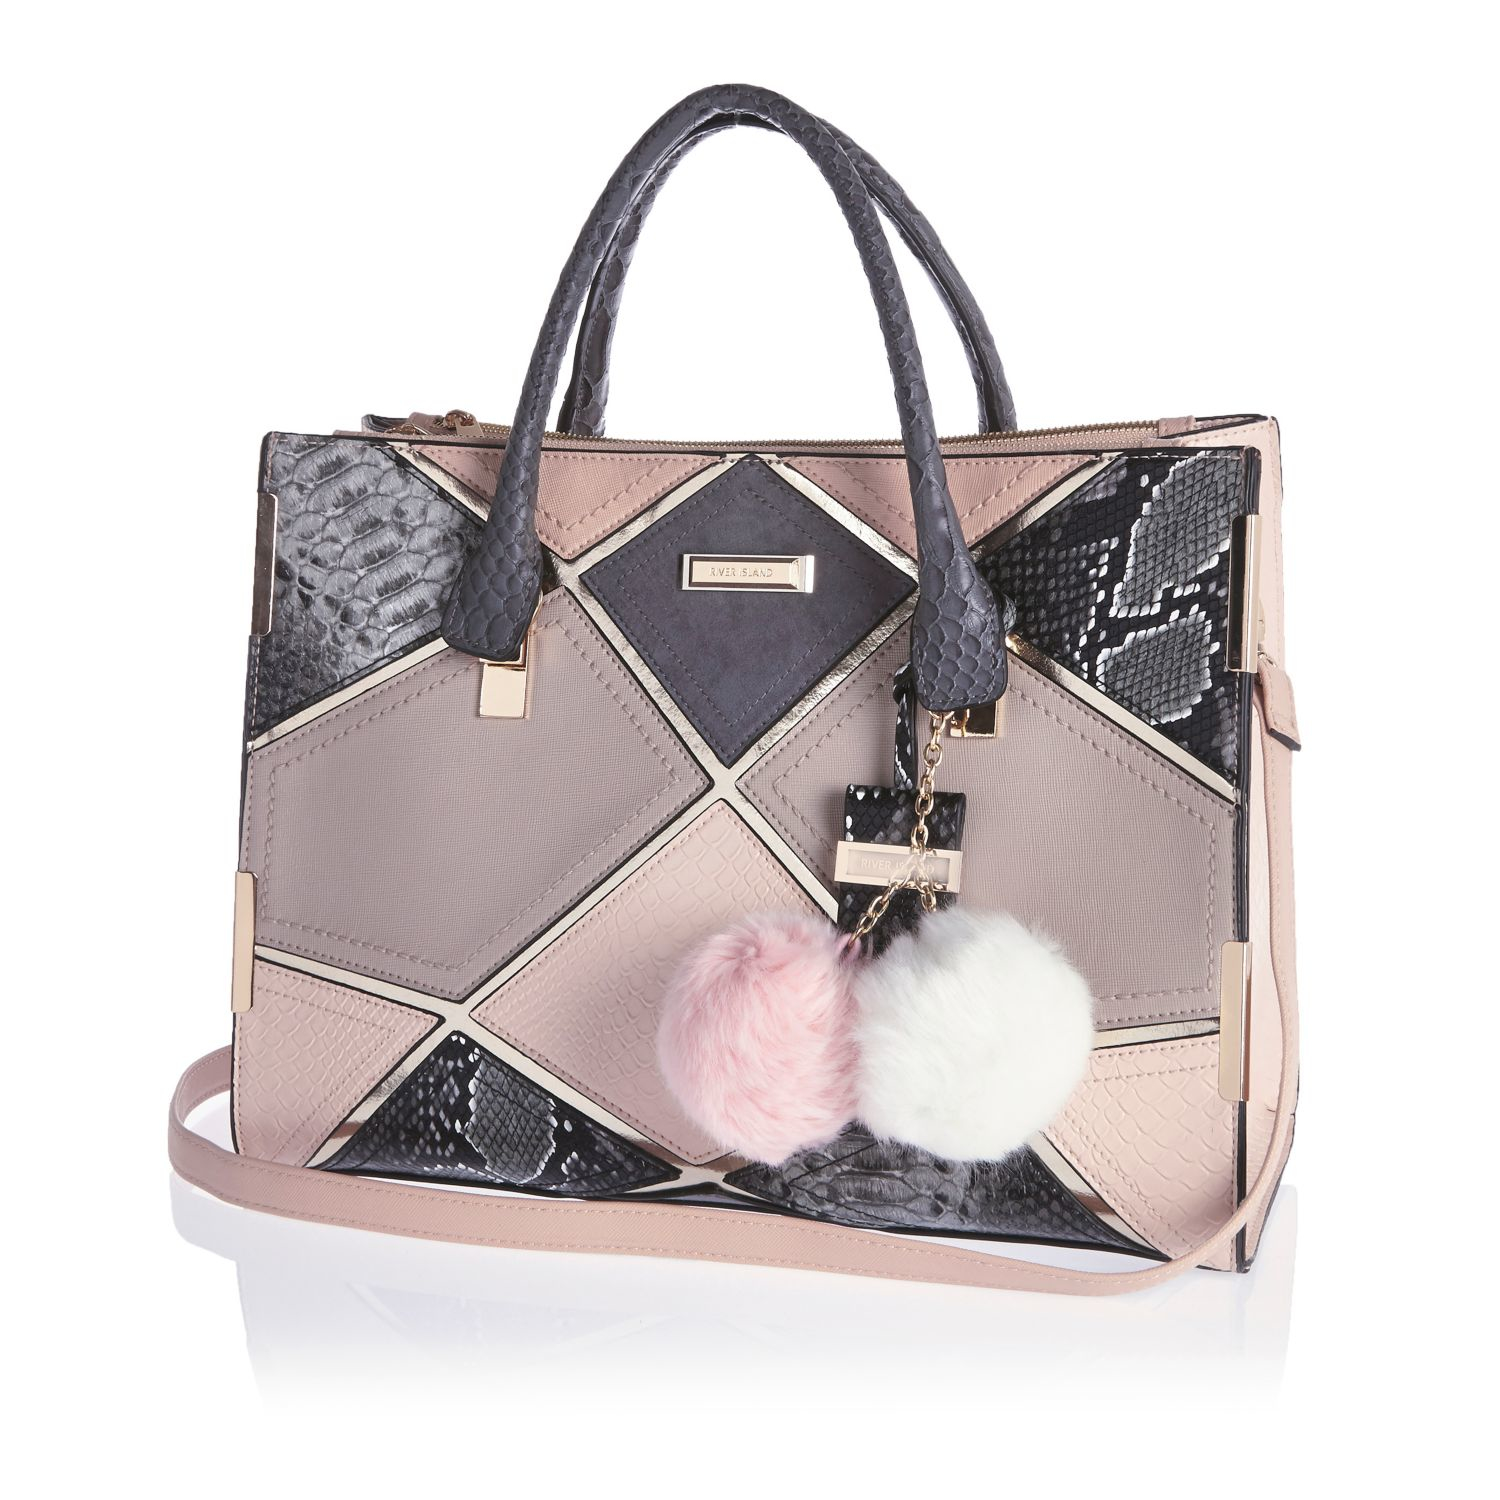 River Island Handbags. Michael Kors Women's Jet Set Item Crossbody Bag ...